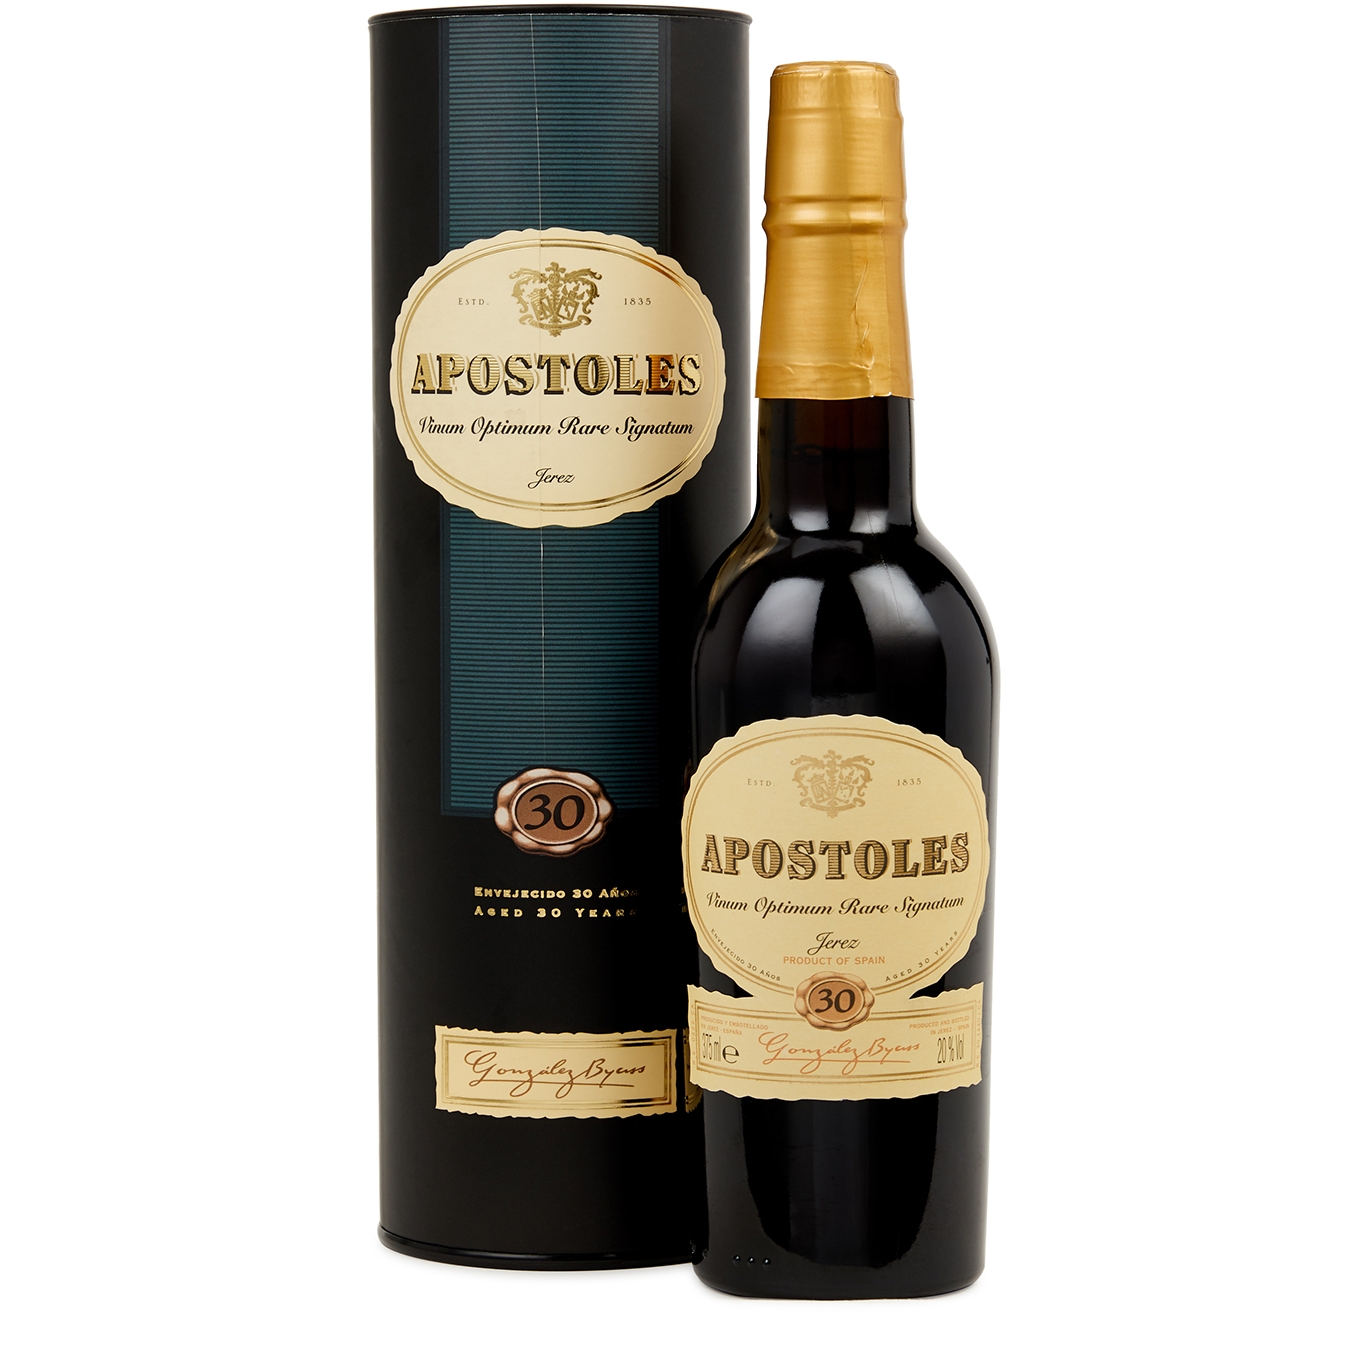 González Byass Apostoles 30 Year Old Palo Cortado Sherry Half Bottle 375ml Port And Fortified Wine